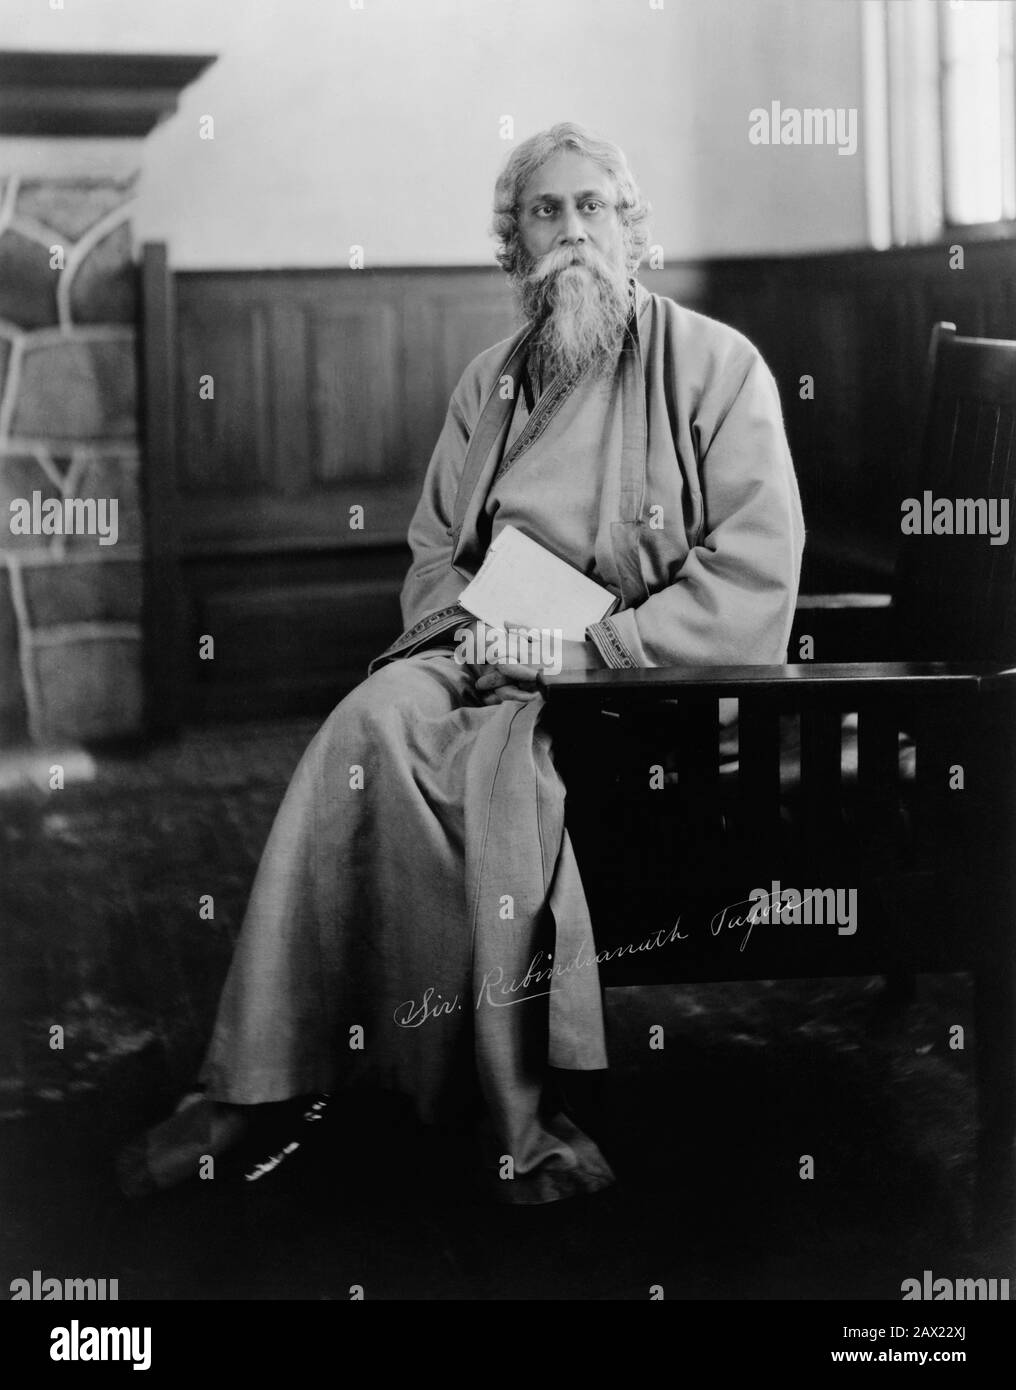 1916 , USA : The celebrated indian poet and writer Rabindranath TAGORE ( Calcutta 1861 - 1941 ) , awarded with Nobel for Literature in 1913 . Photo by D.M. BENNETT , Washington, DC , USA   - LETTERATO - SCRITTORE - LETTERATURA - Literature  - POESIA - POETRY - POET - POETA - portrait - ritratto  - PREMIO NOBEL LETTERATURA  ancient older man - uomo anziano vecchio - bear - barba - autograph - autografo - signature - firma ----  Archivio GBB Stock Photo